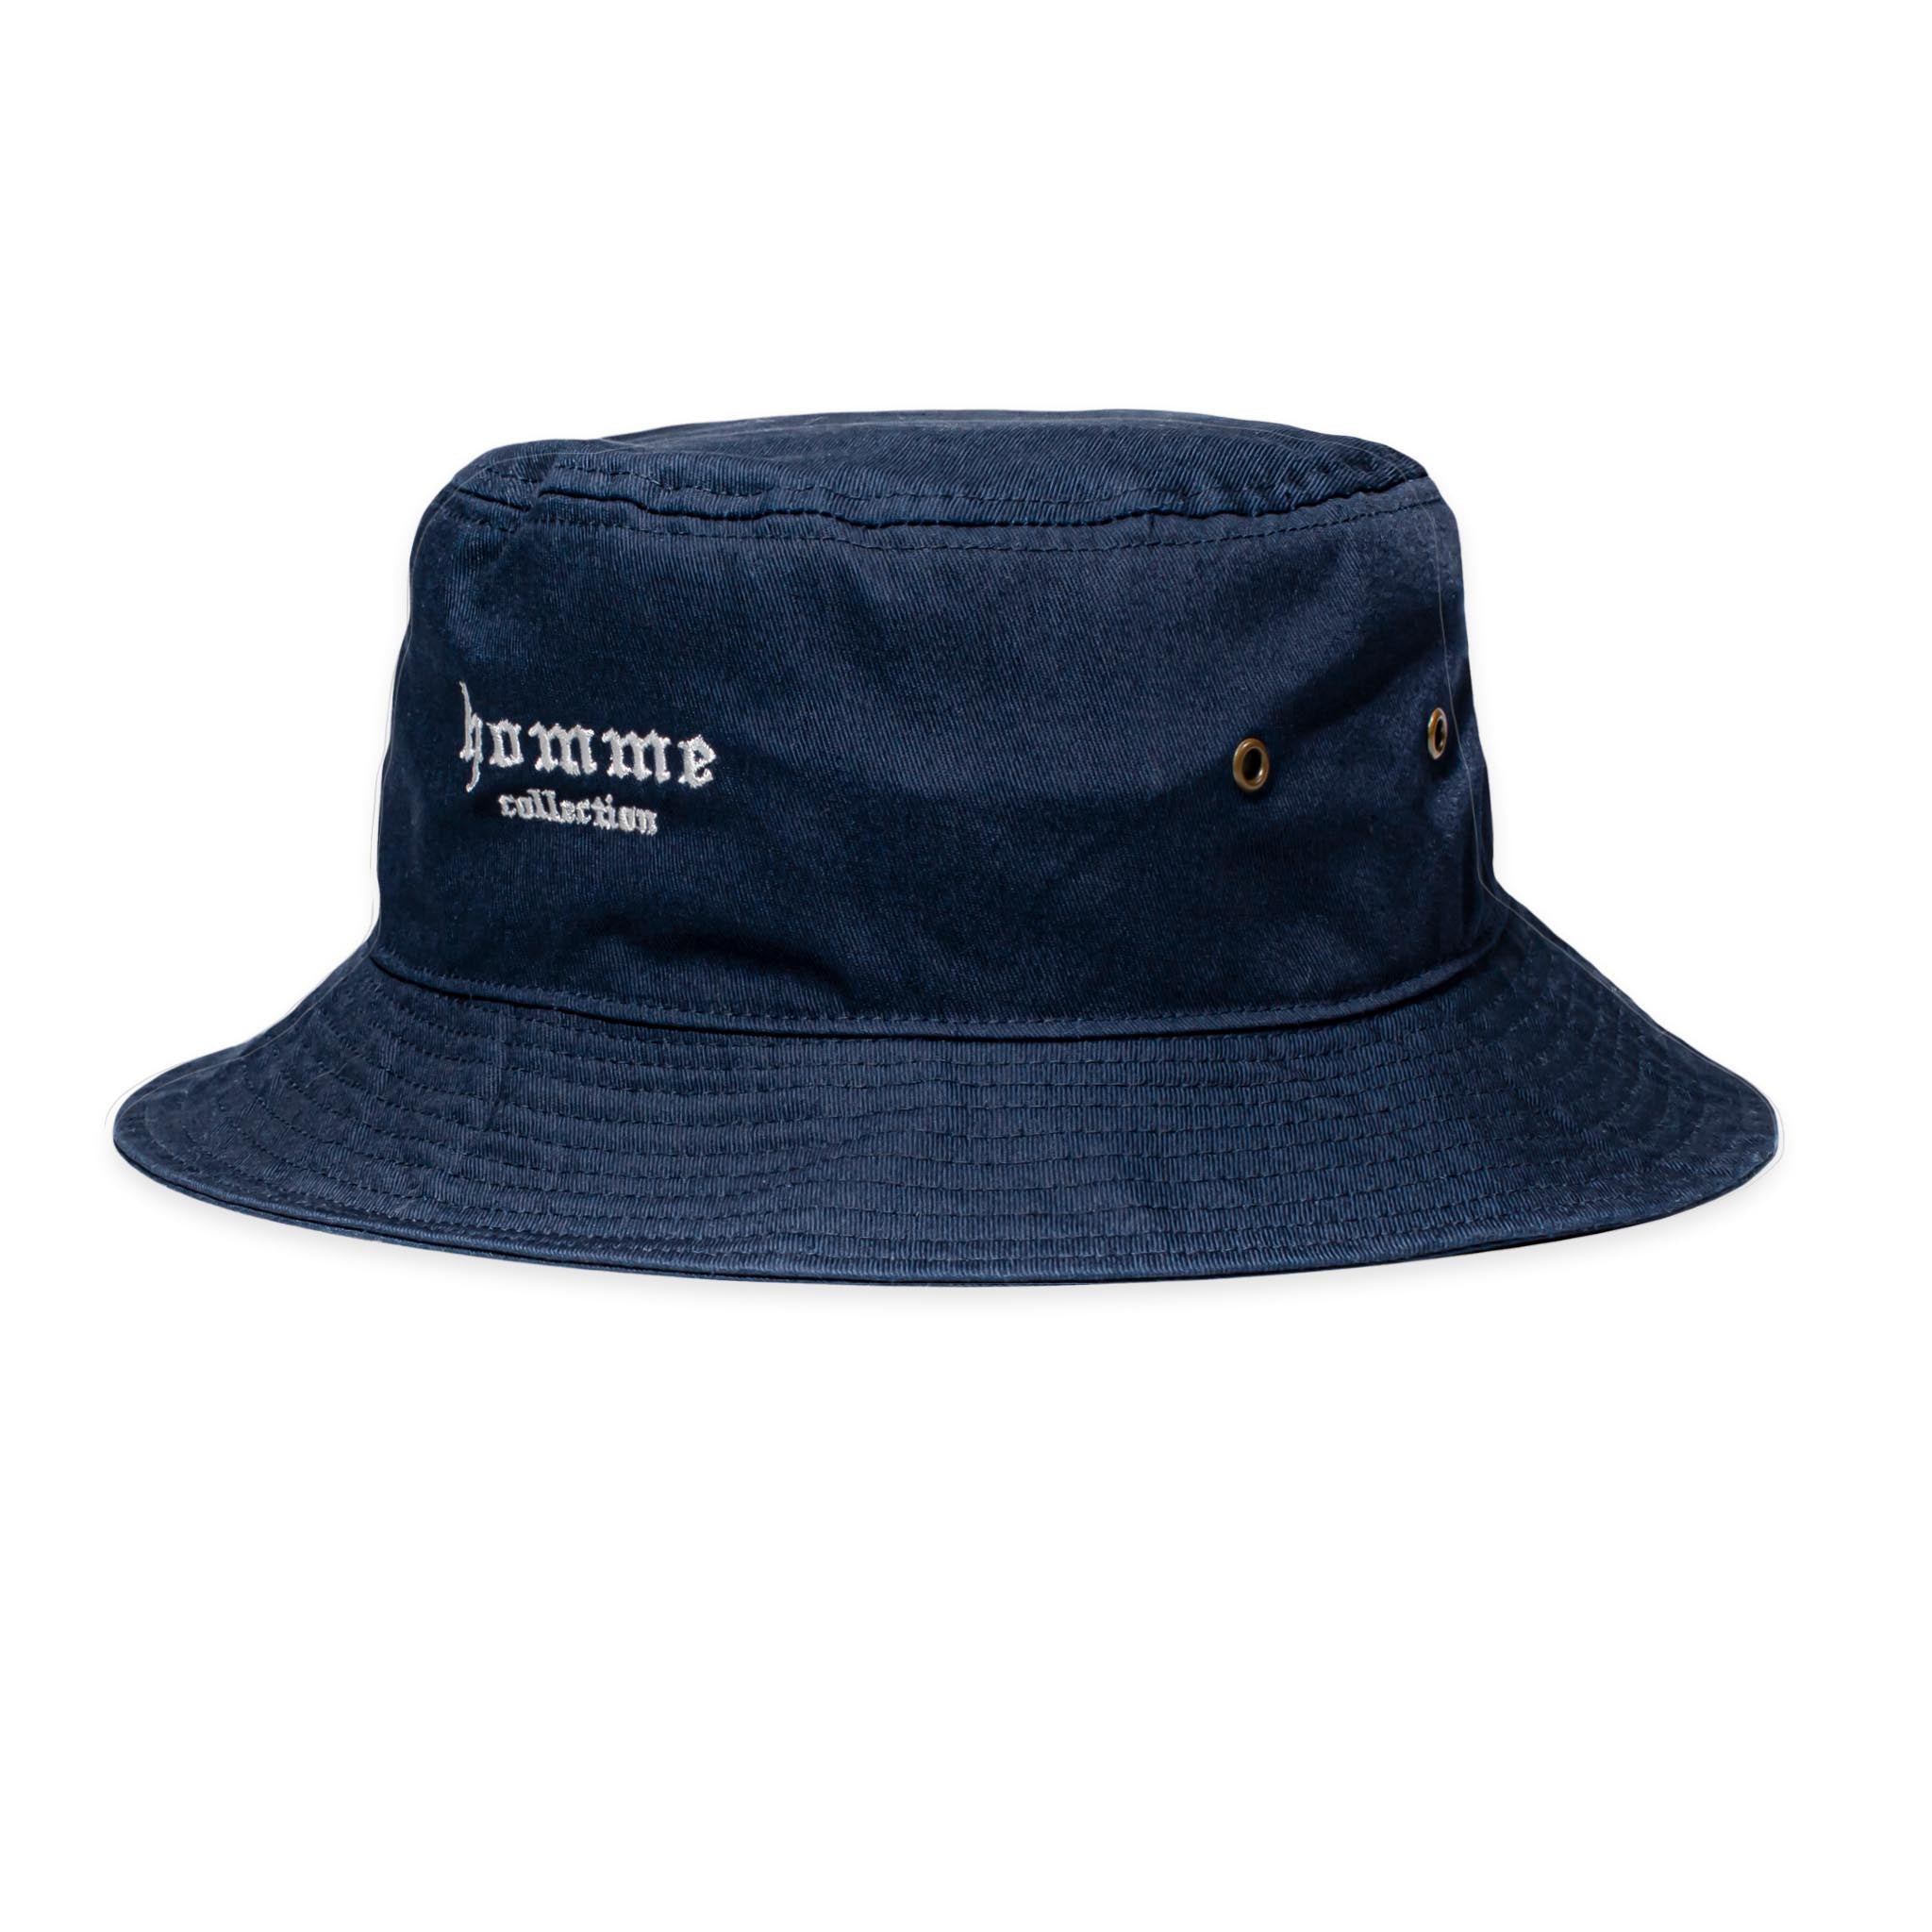 HOMME+ Collection Bucket Hat Navy & SNEAKERBOX